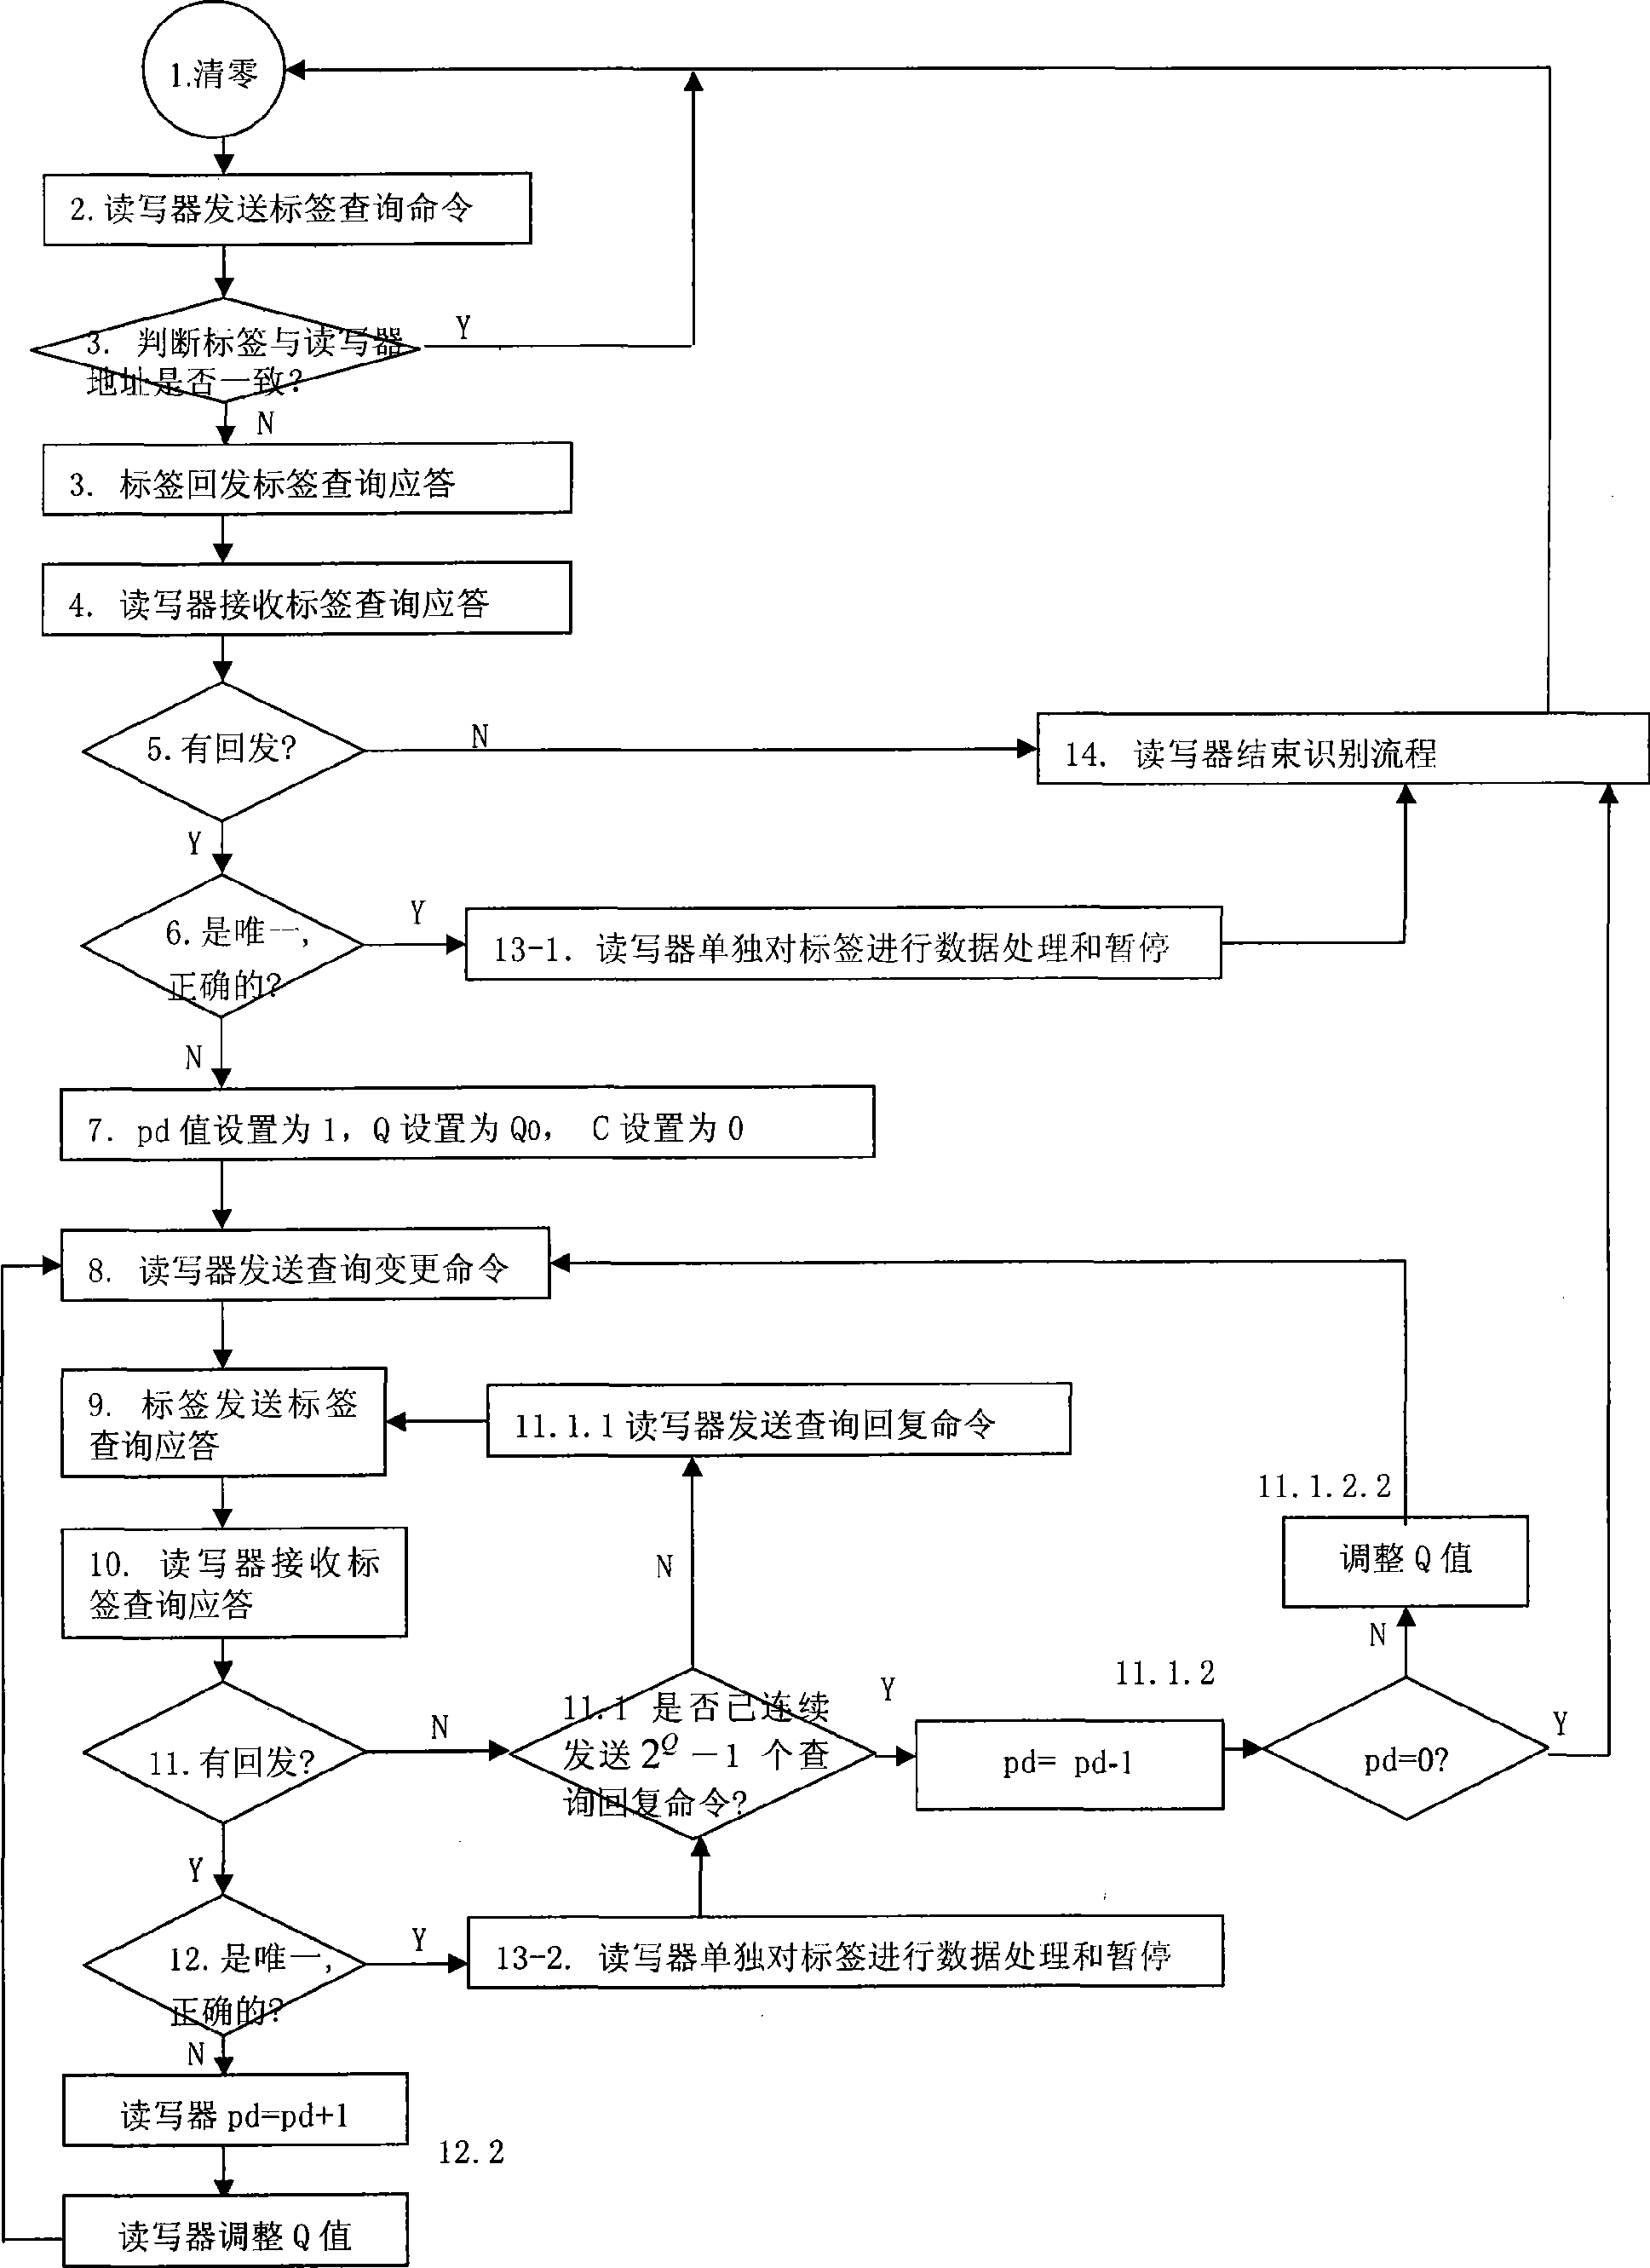 Multi-label anti-collision algorithm